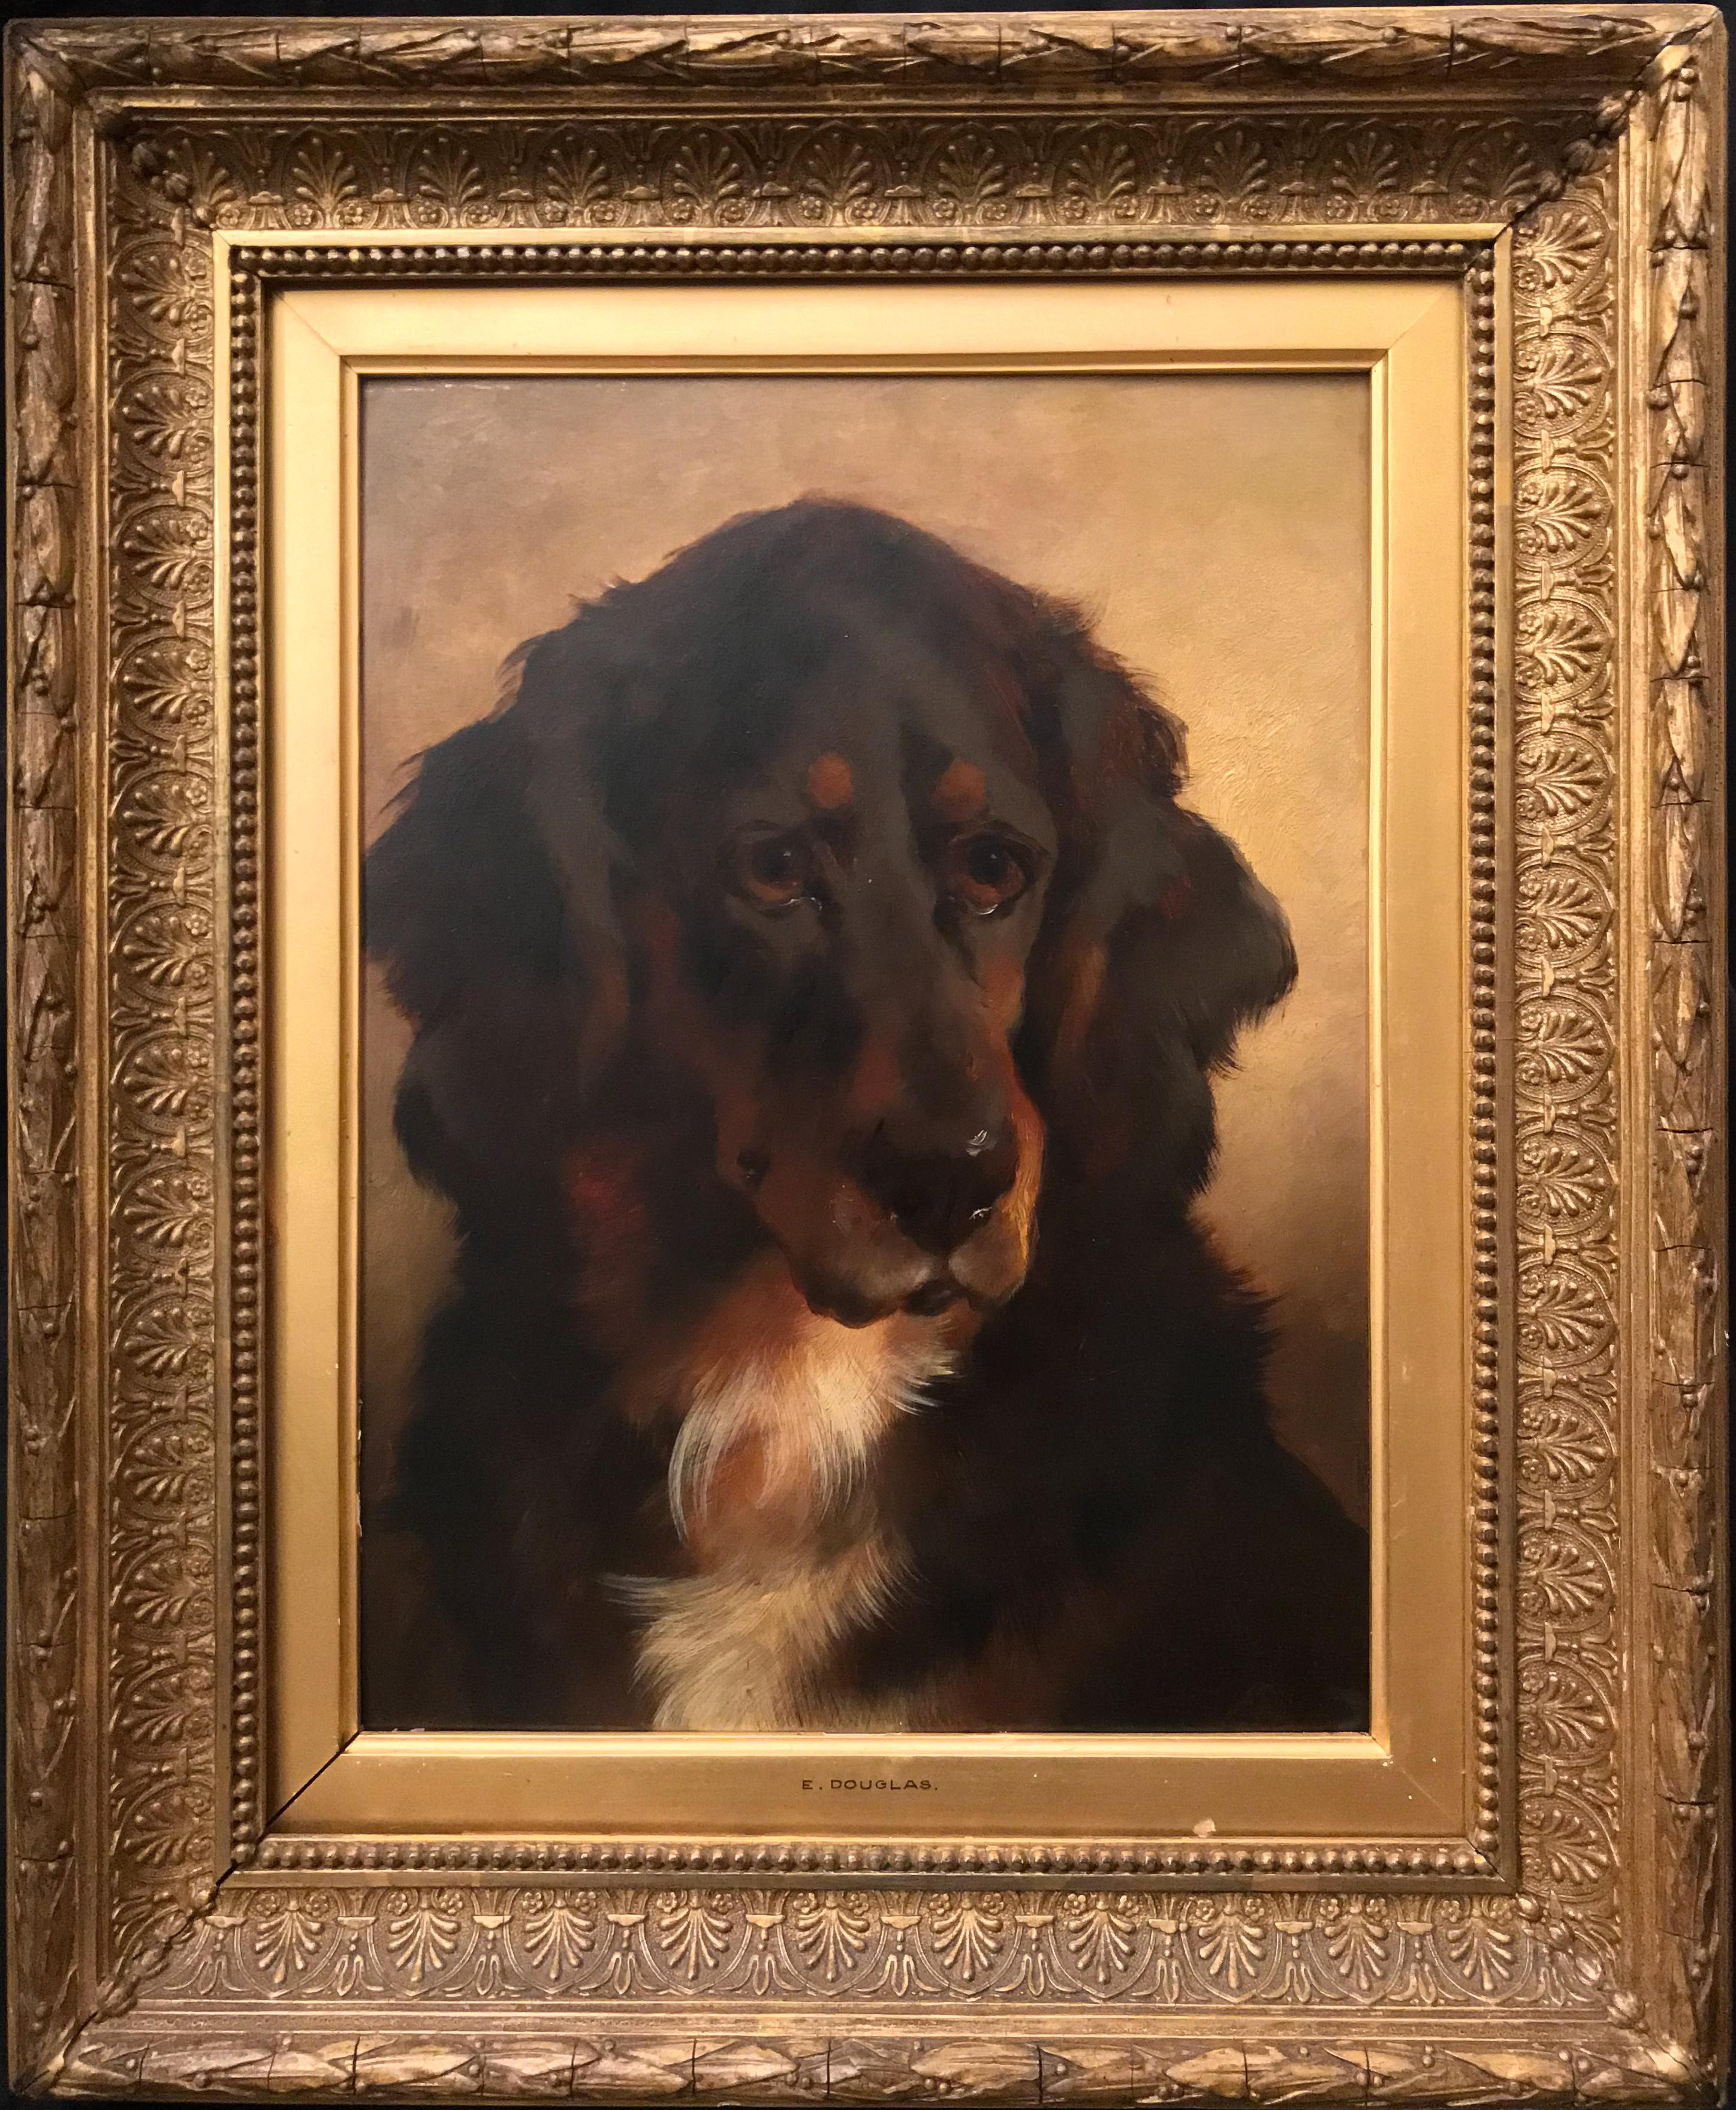 Edwin Douglas Animal Painting - A faithful friend